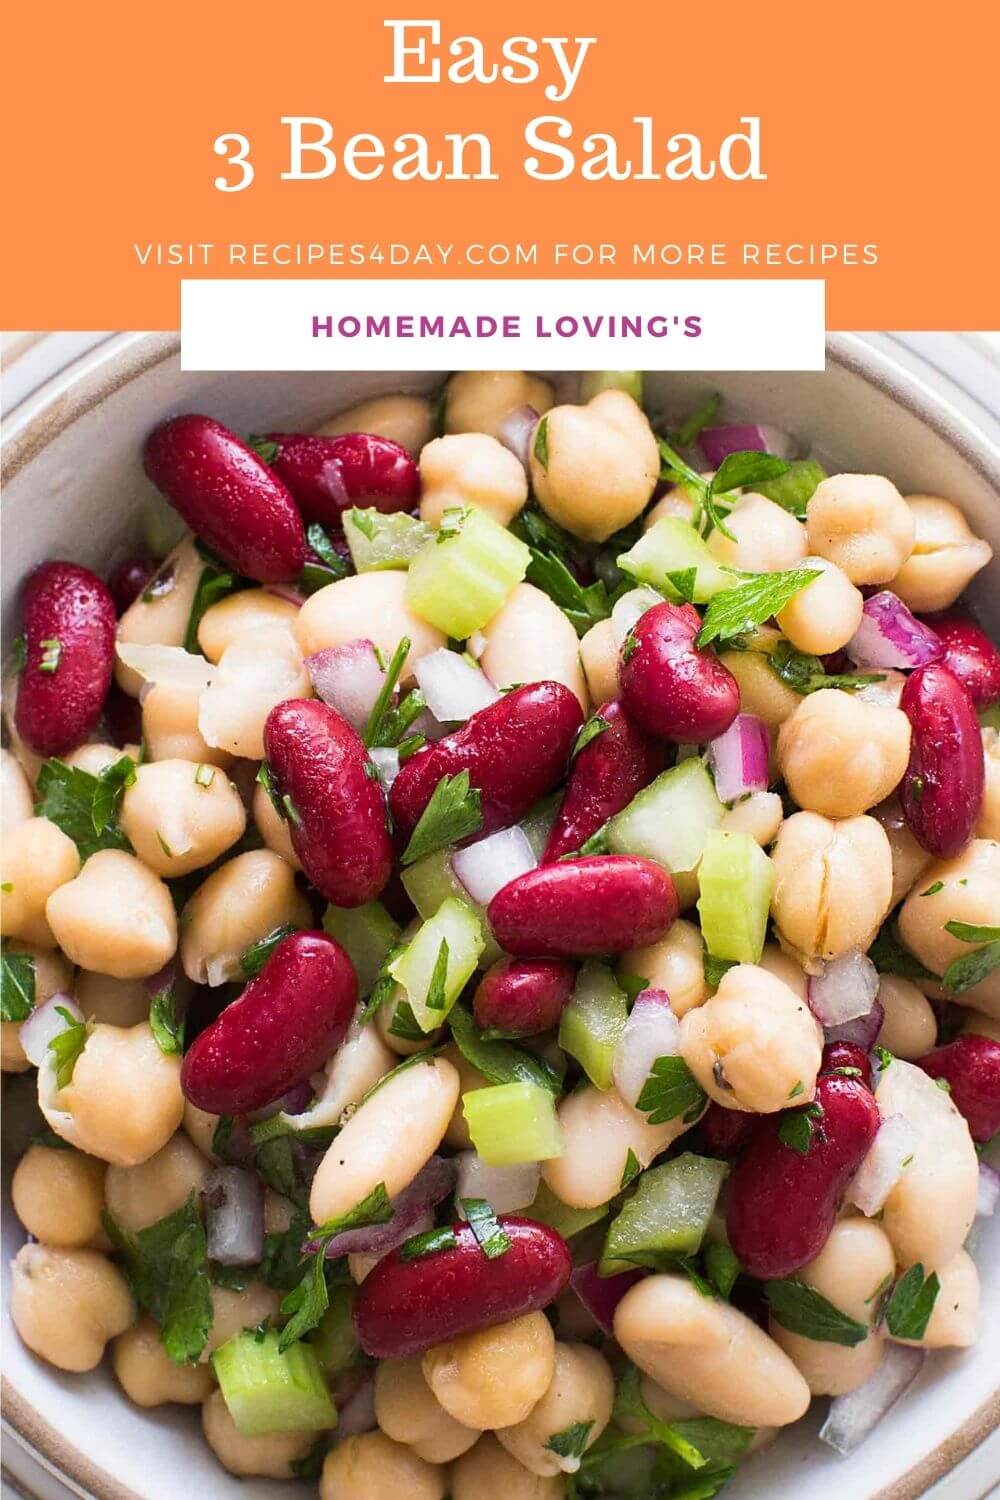 Easy 3 Bean Salad Recipe